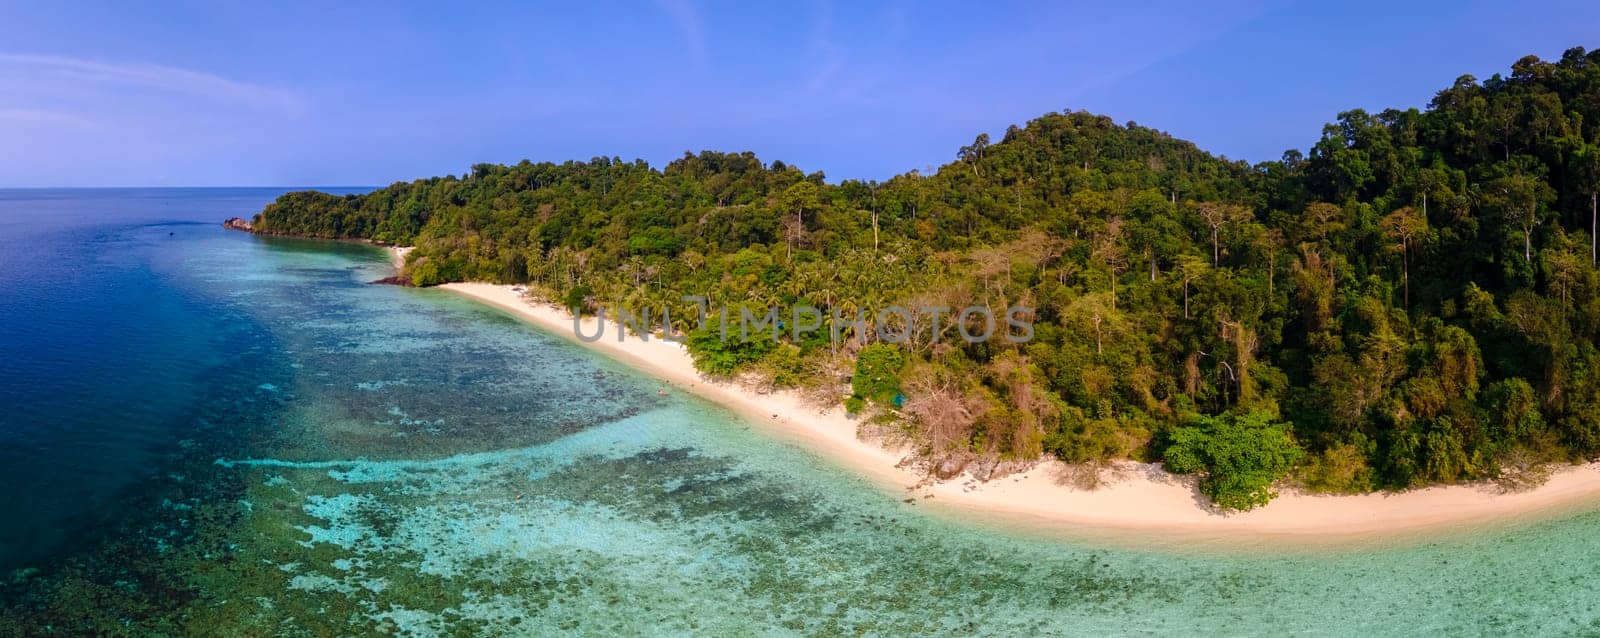 view at the beach of Koh Kradan island in Thailand by fokkebok